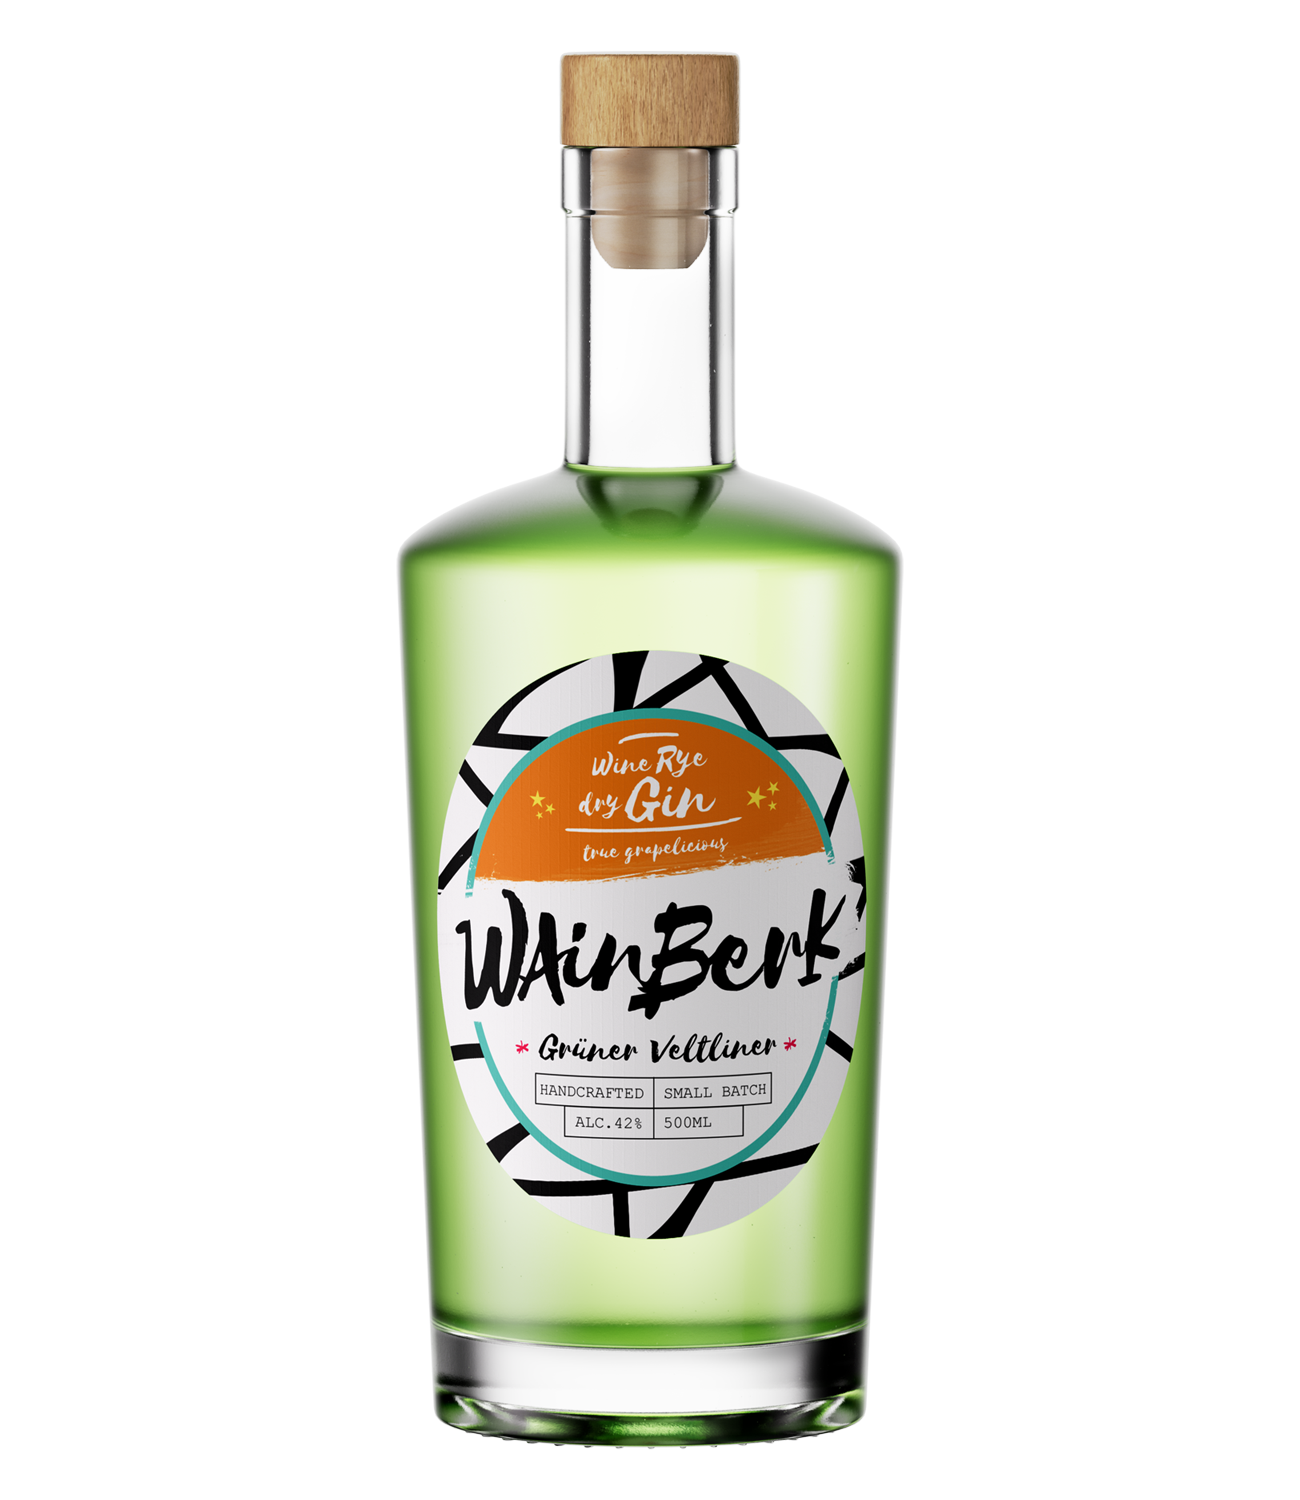 Wainberk Gin - Grüner Veltliner